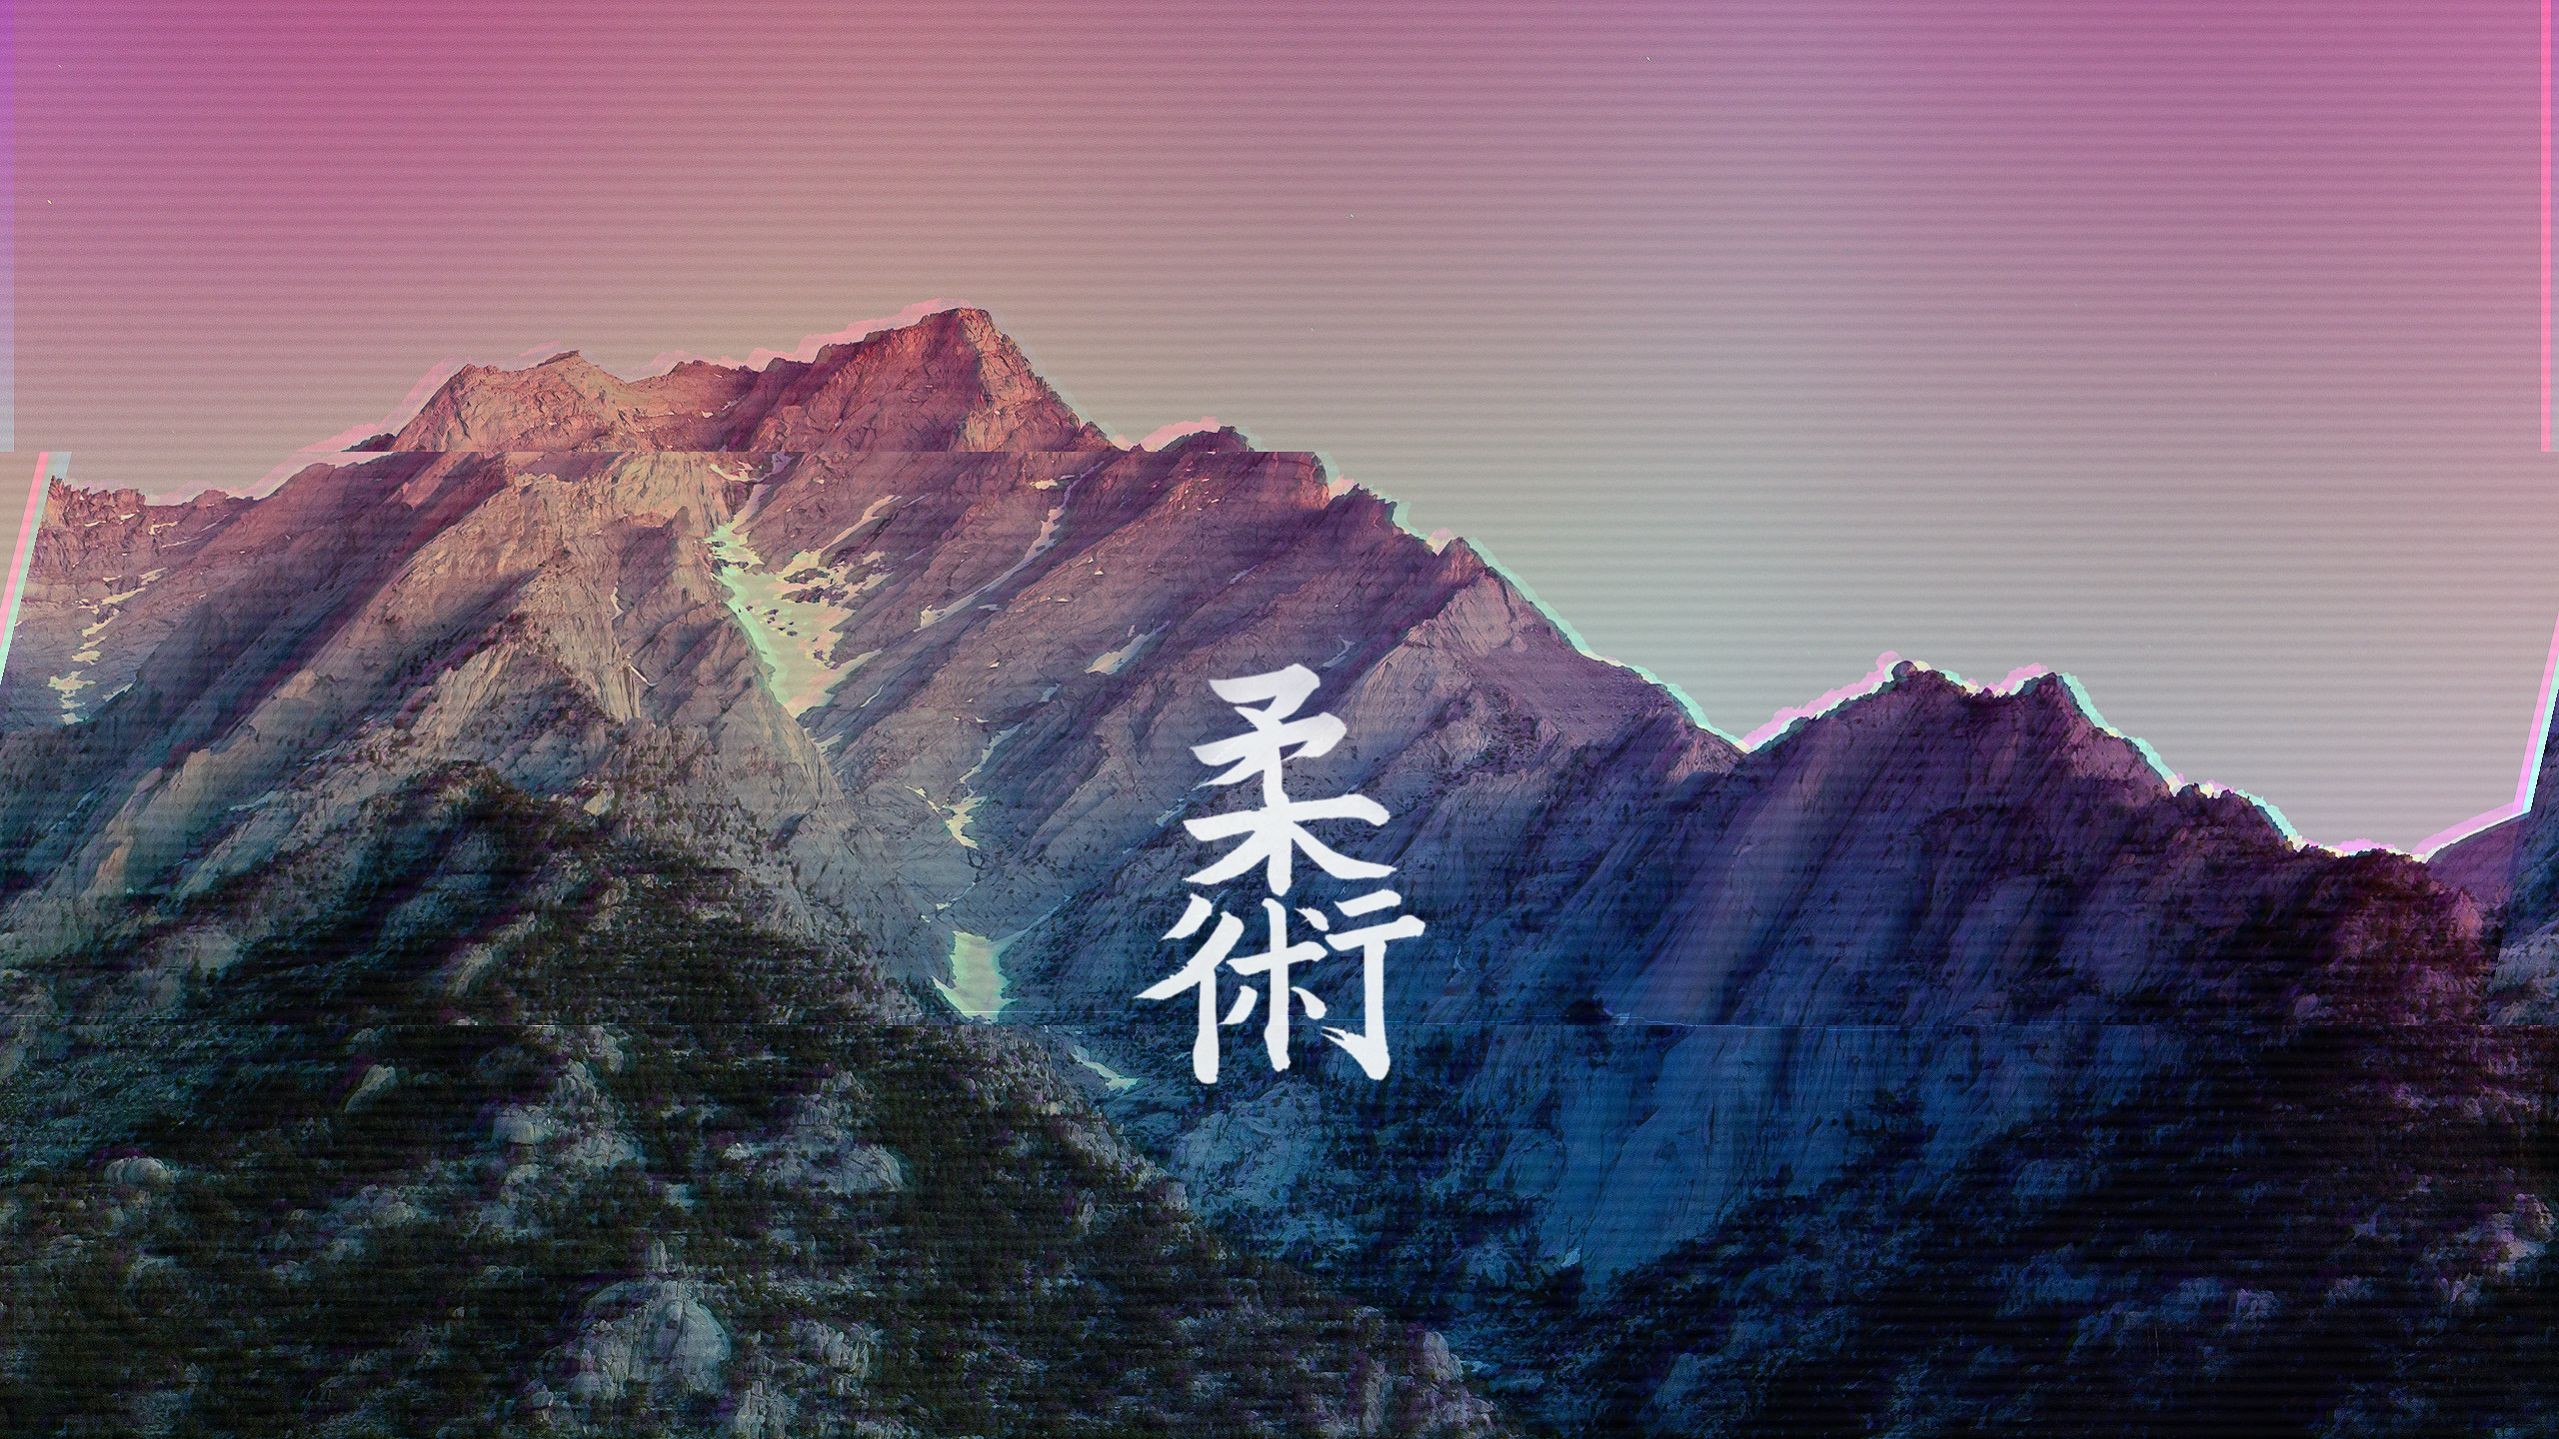 General 2559x1439 vaporwave mountains kanji letter nature glitch art digital art